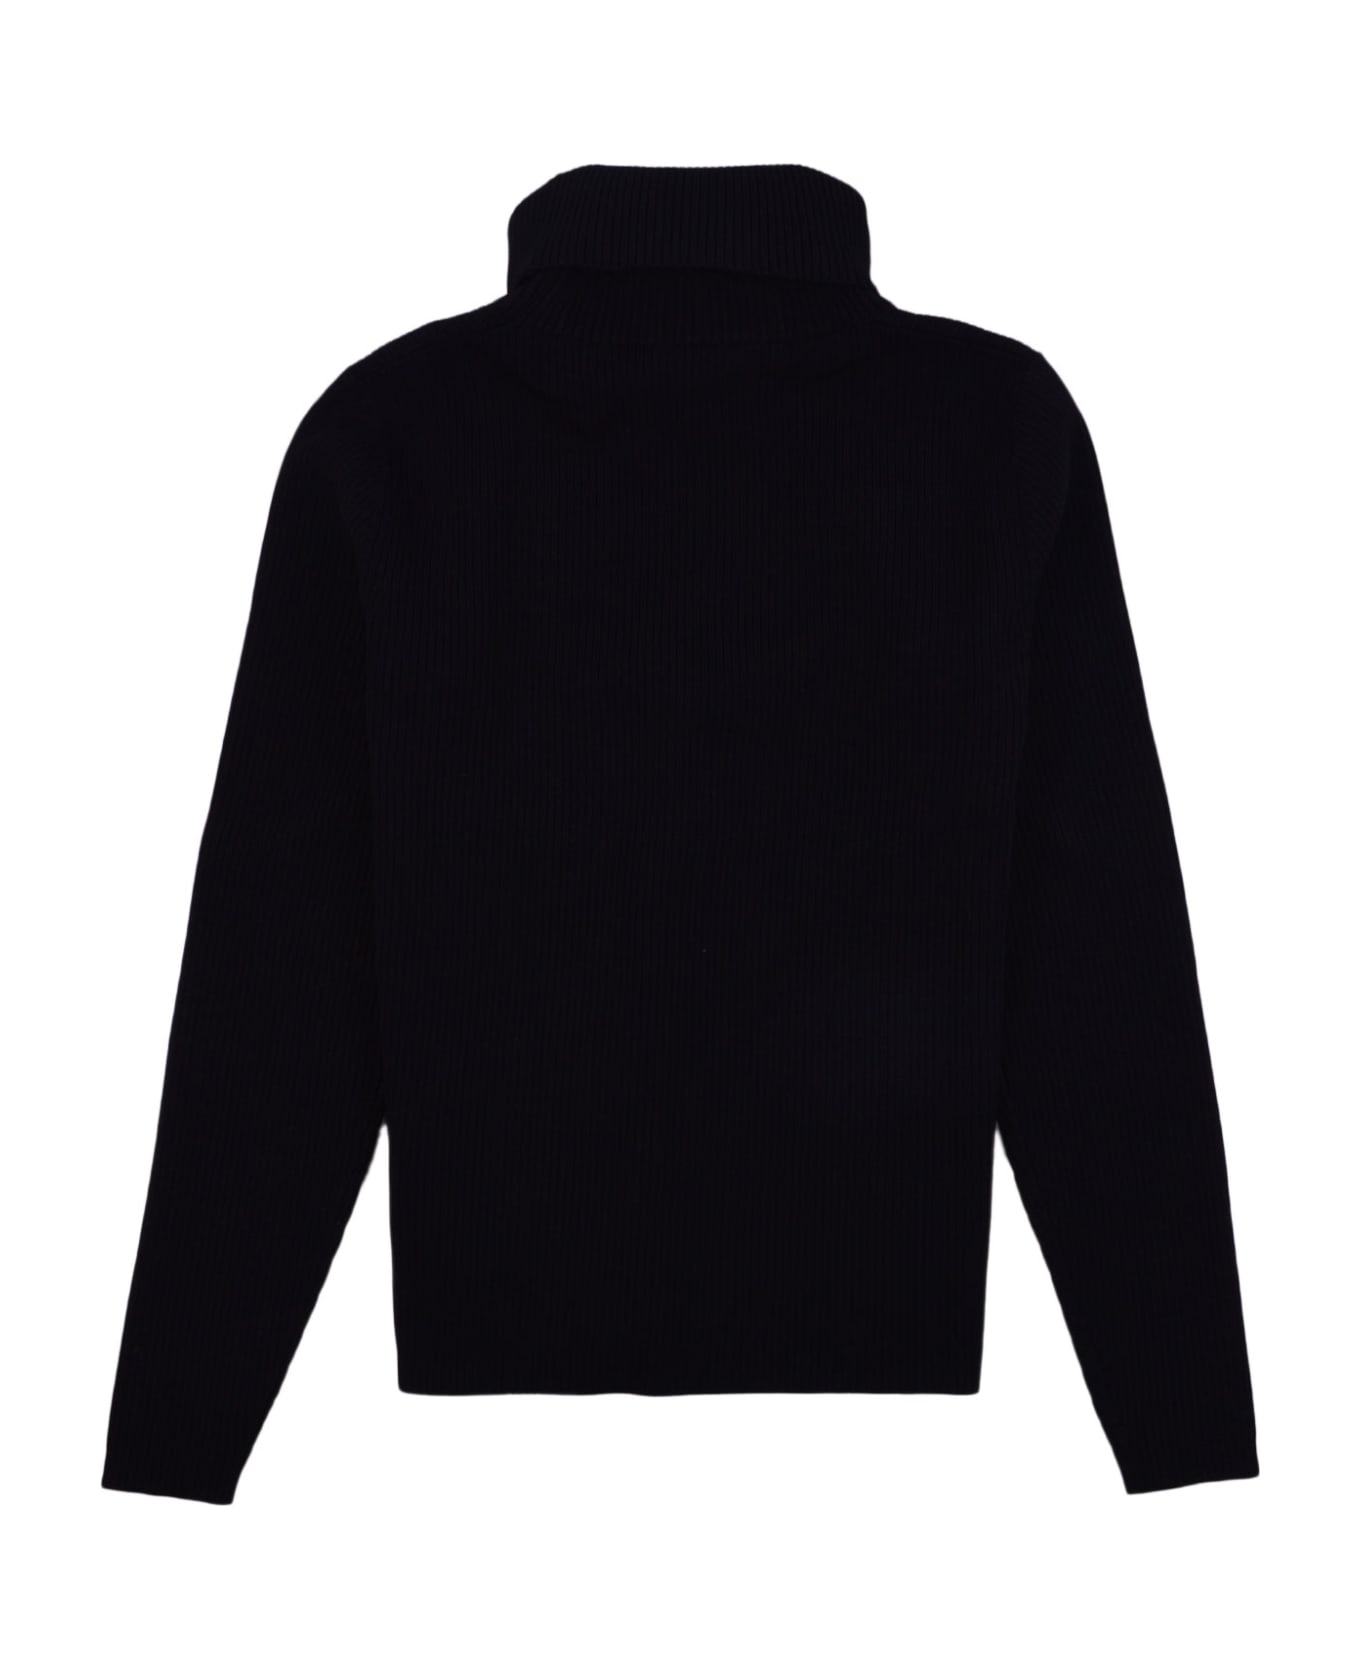 RRD - Roberto Ricci Design Sweater - Nero ニットウェア